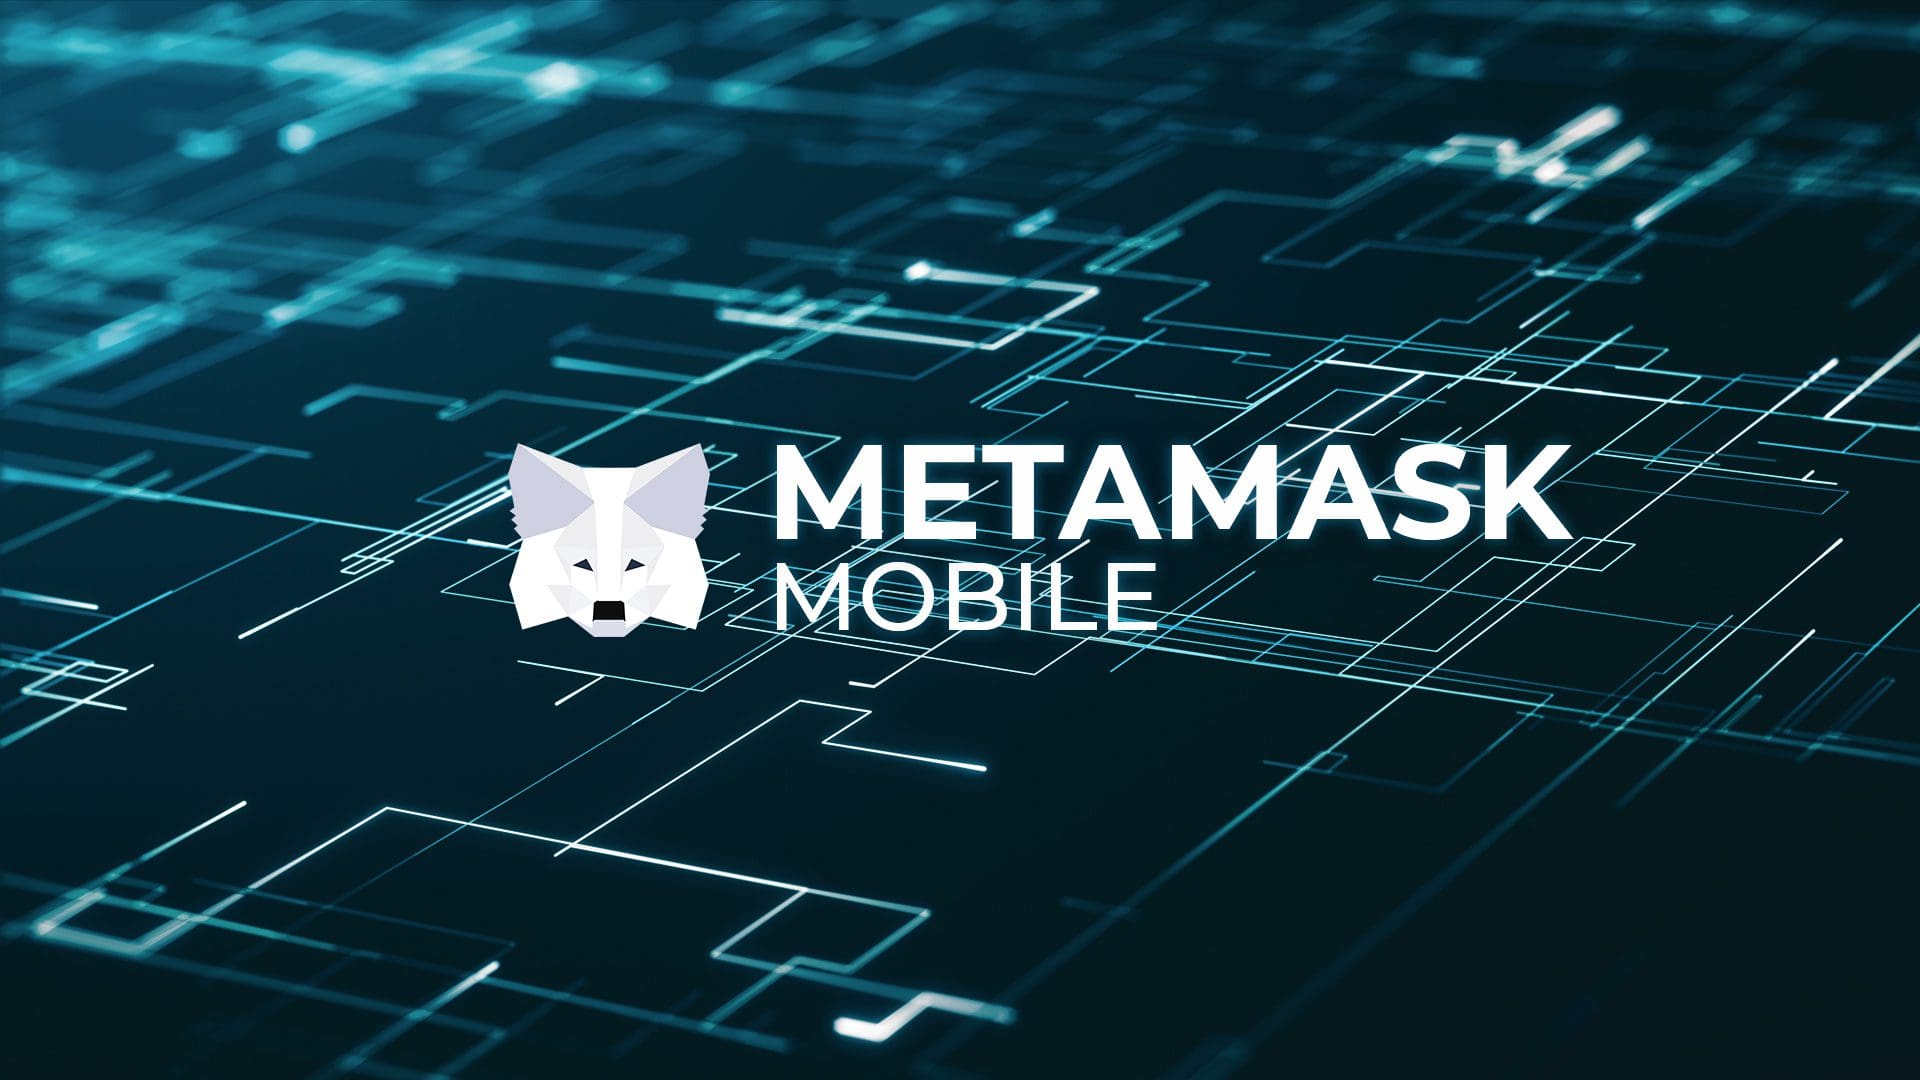 Come funziona MetaMask Mobile: breve guida